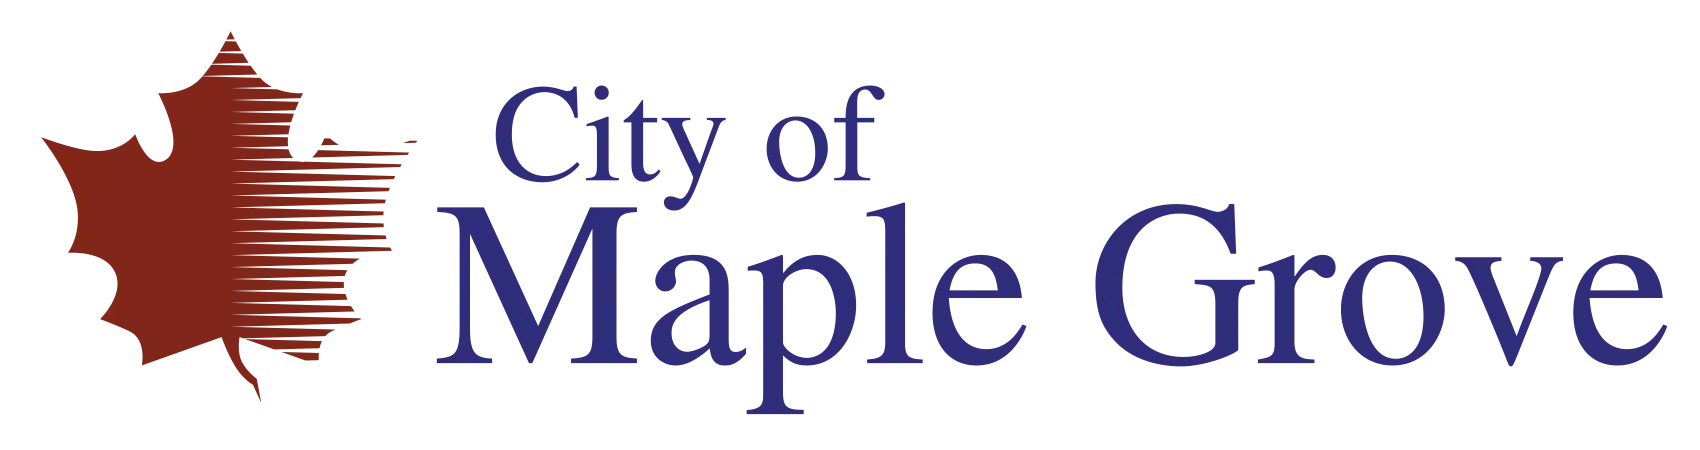 City of Maple Grove, MN Logo